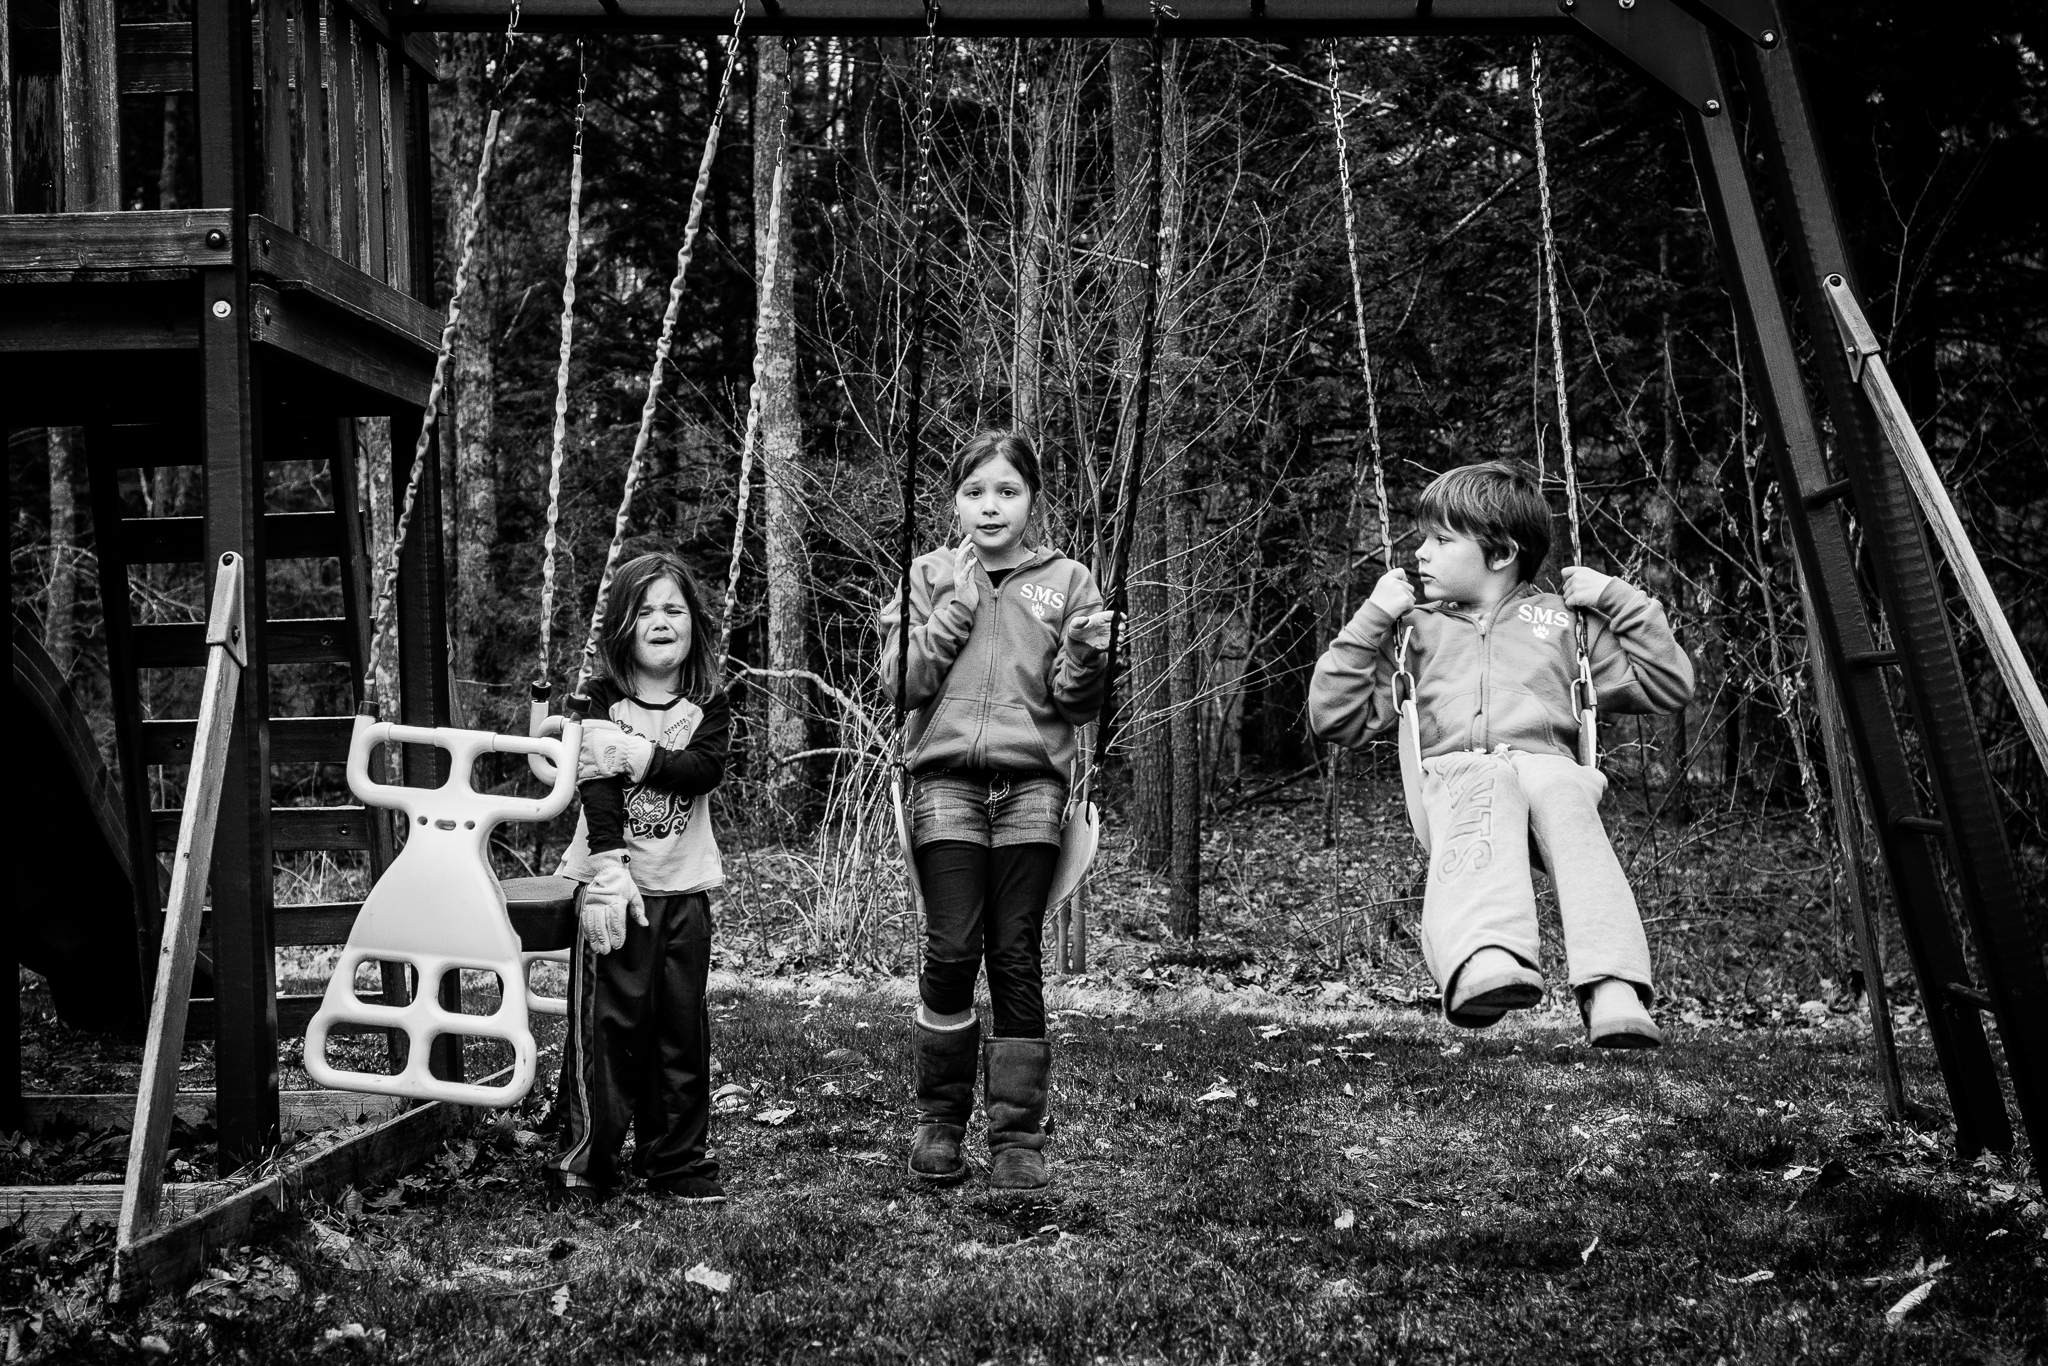 little girl hurt on swings with siblings looking on